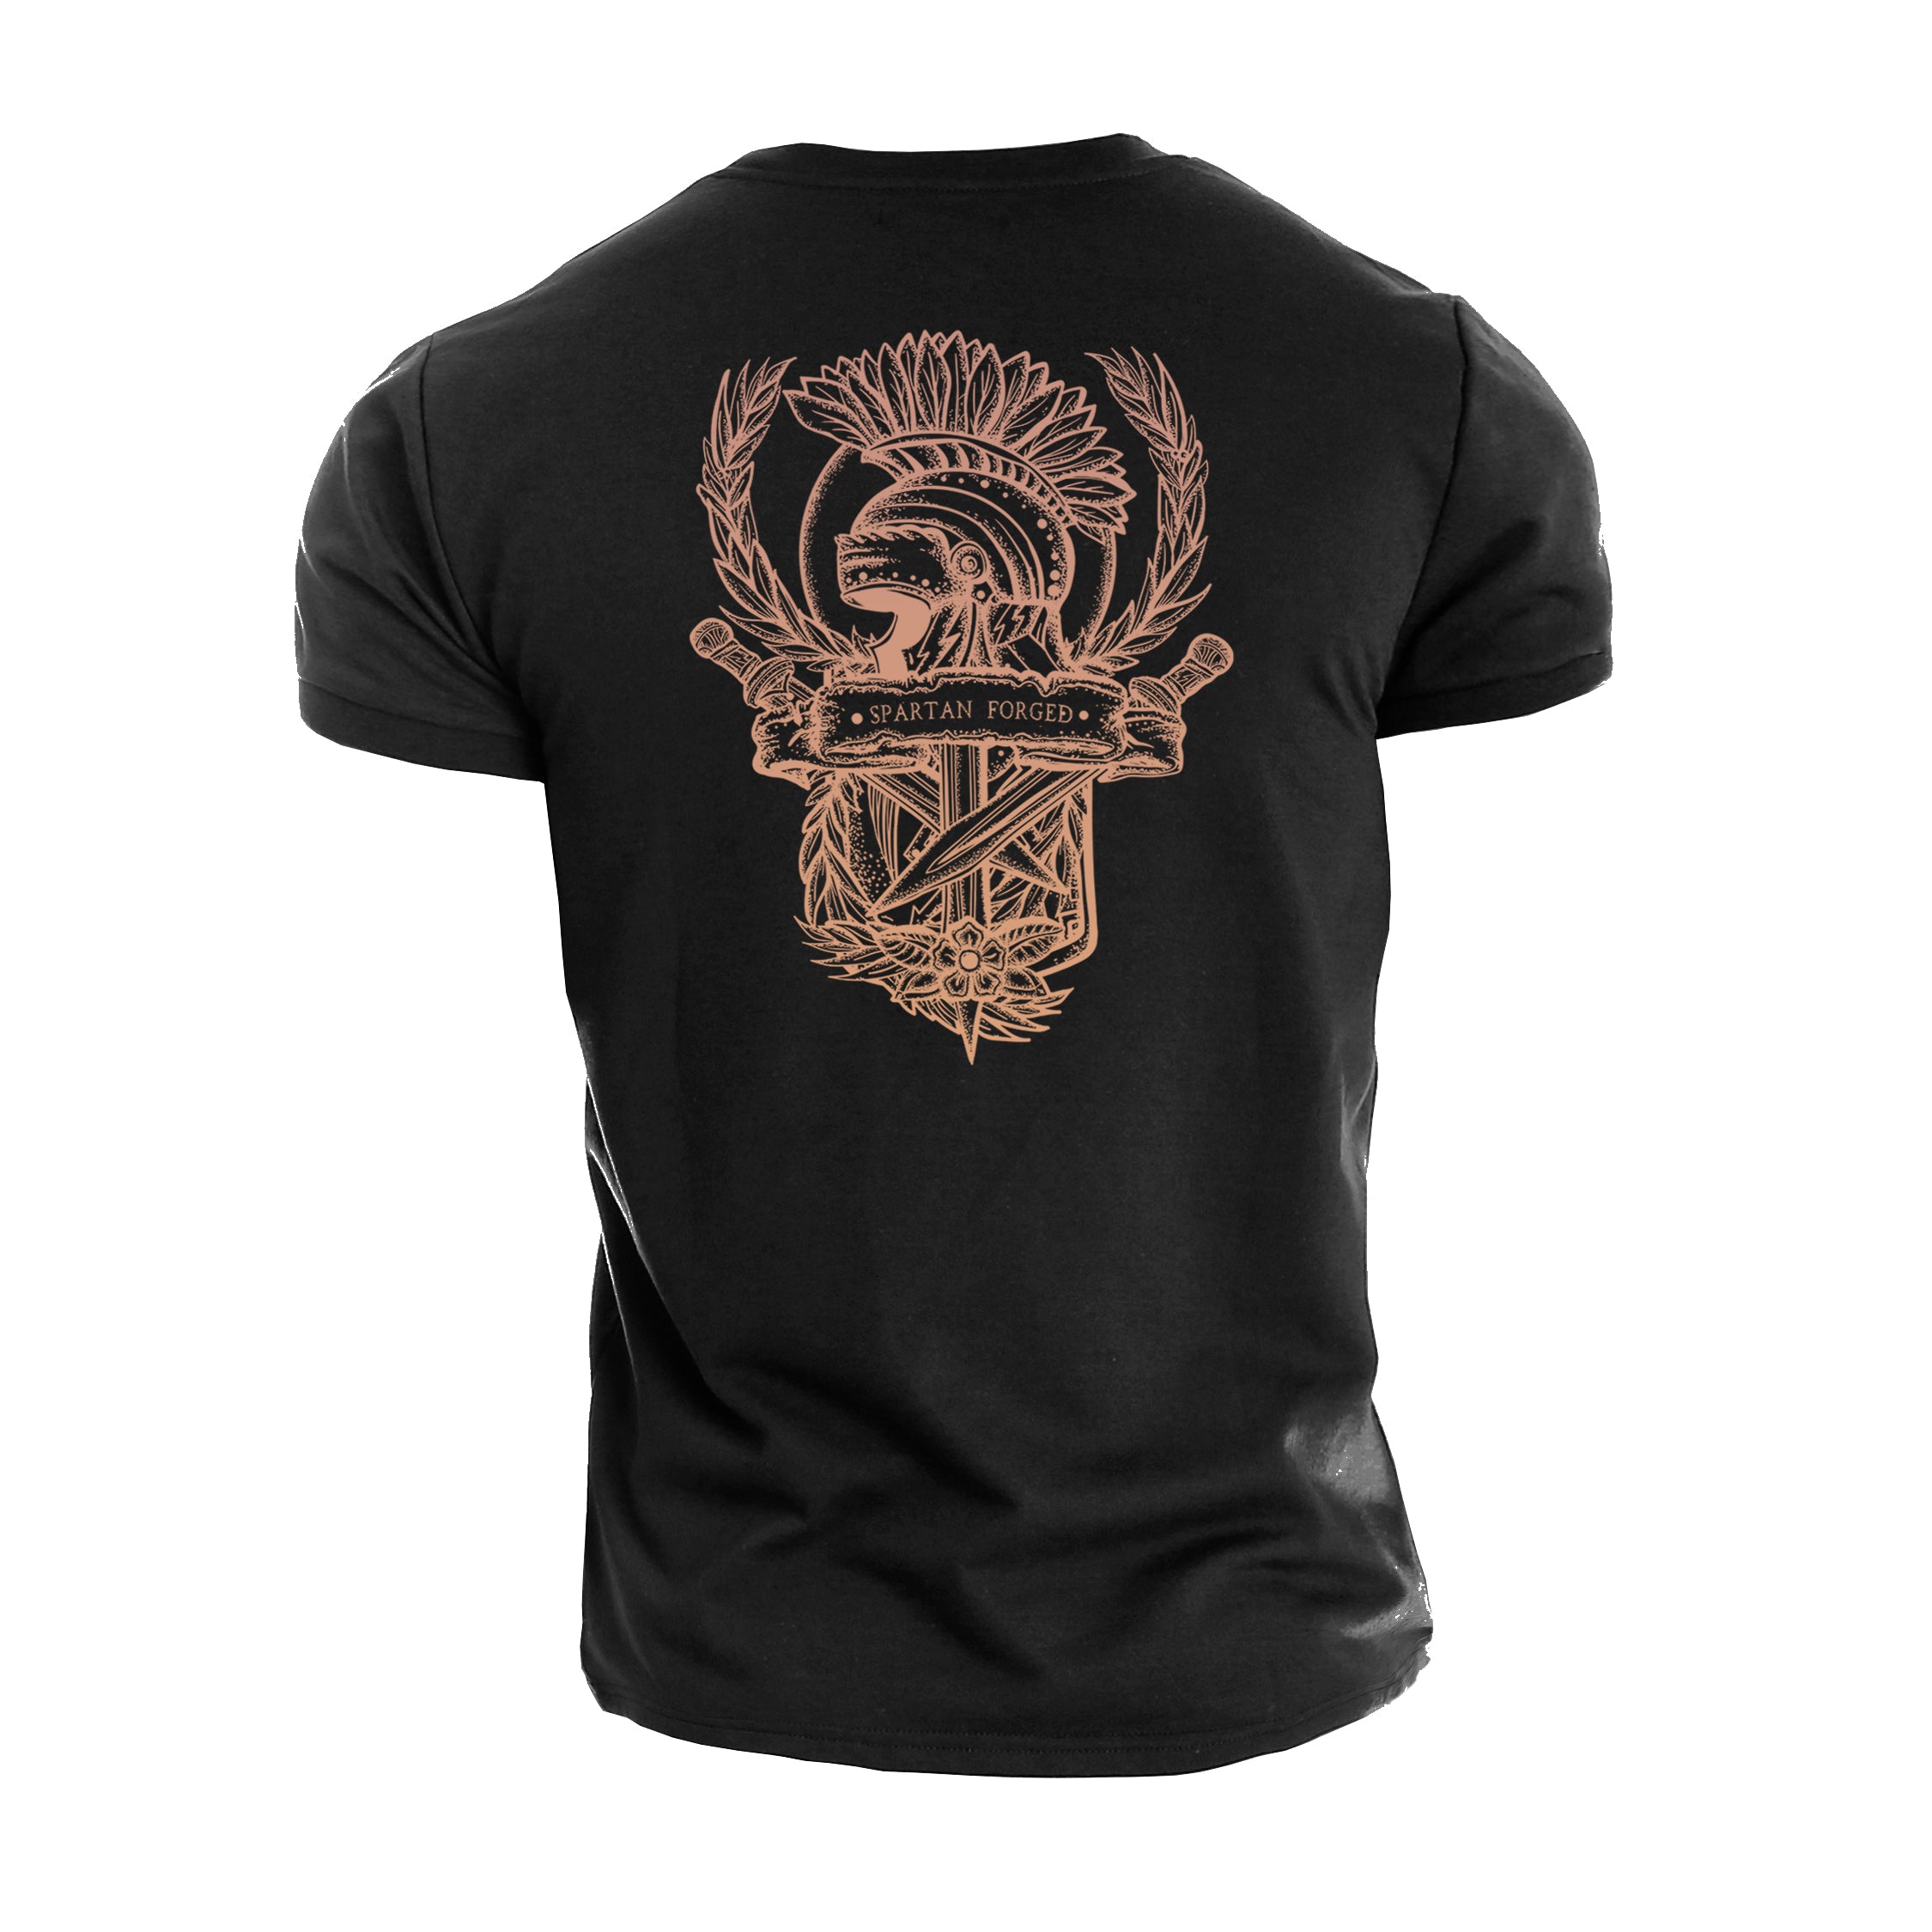 Spartan Forged Crest - Spartan Forged - Gym T-Shirt